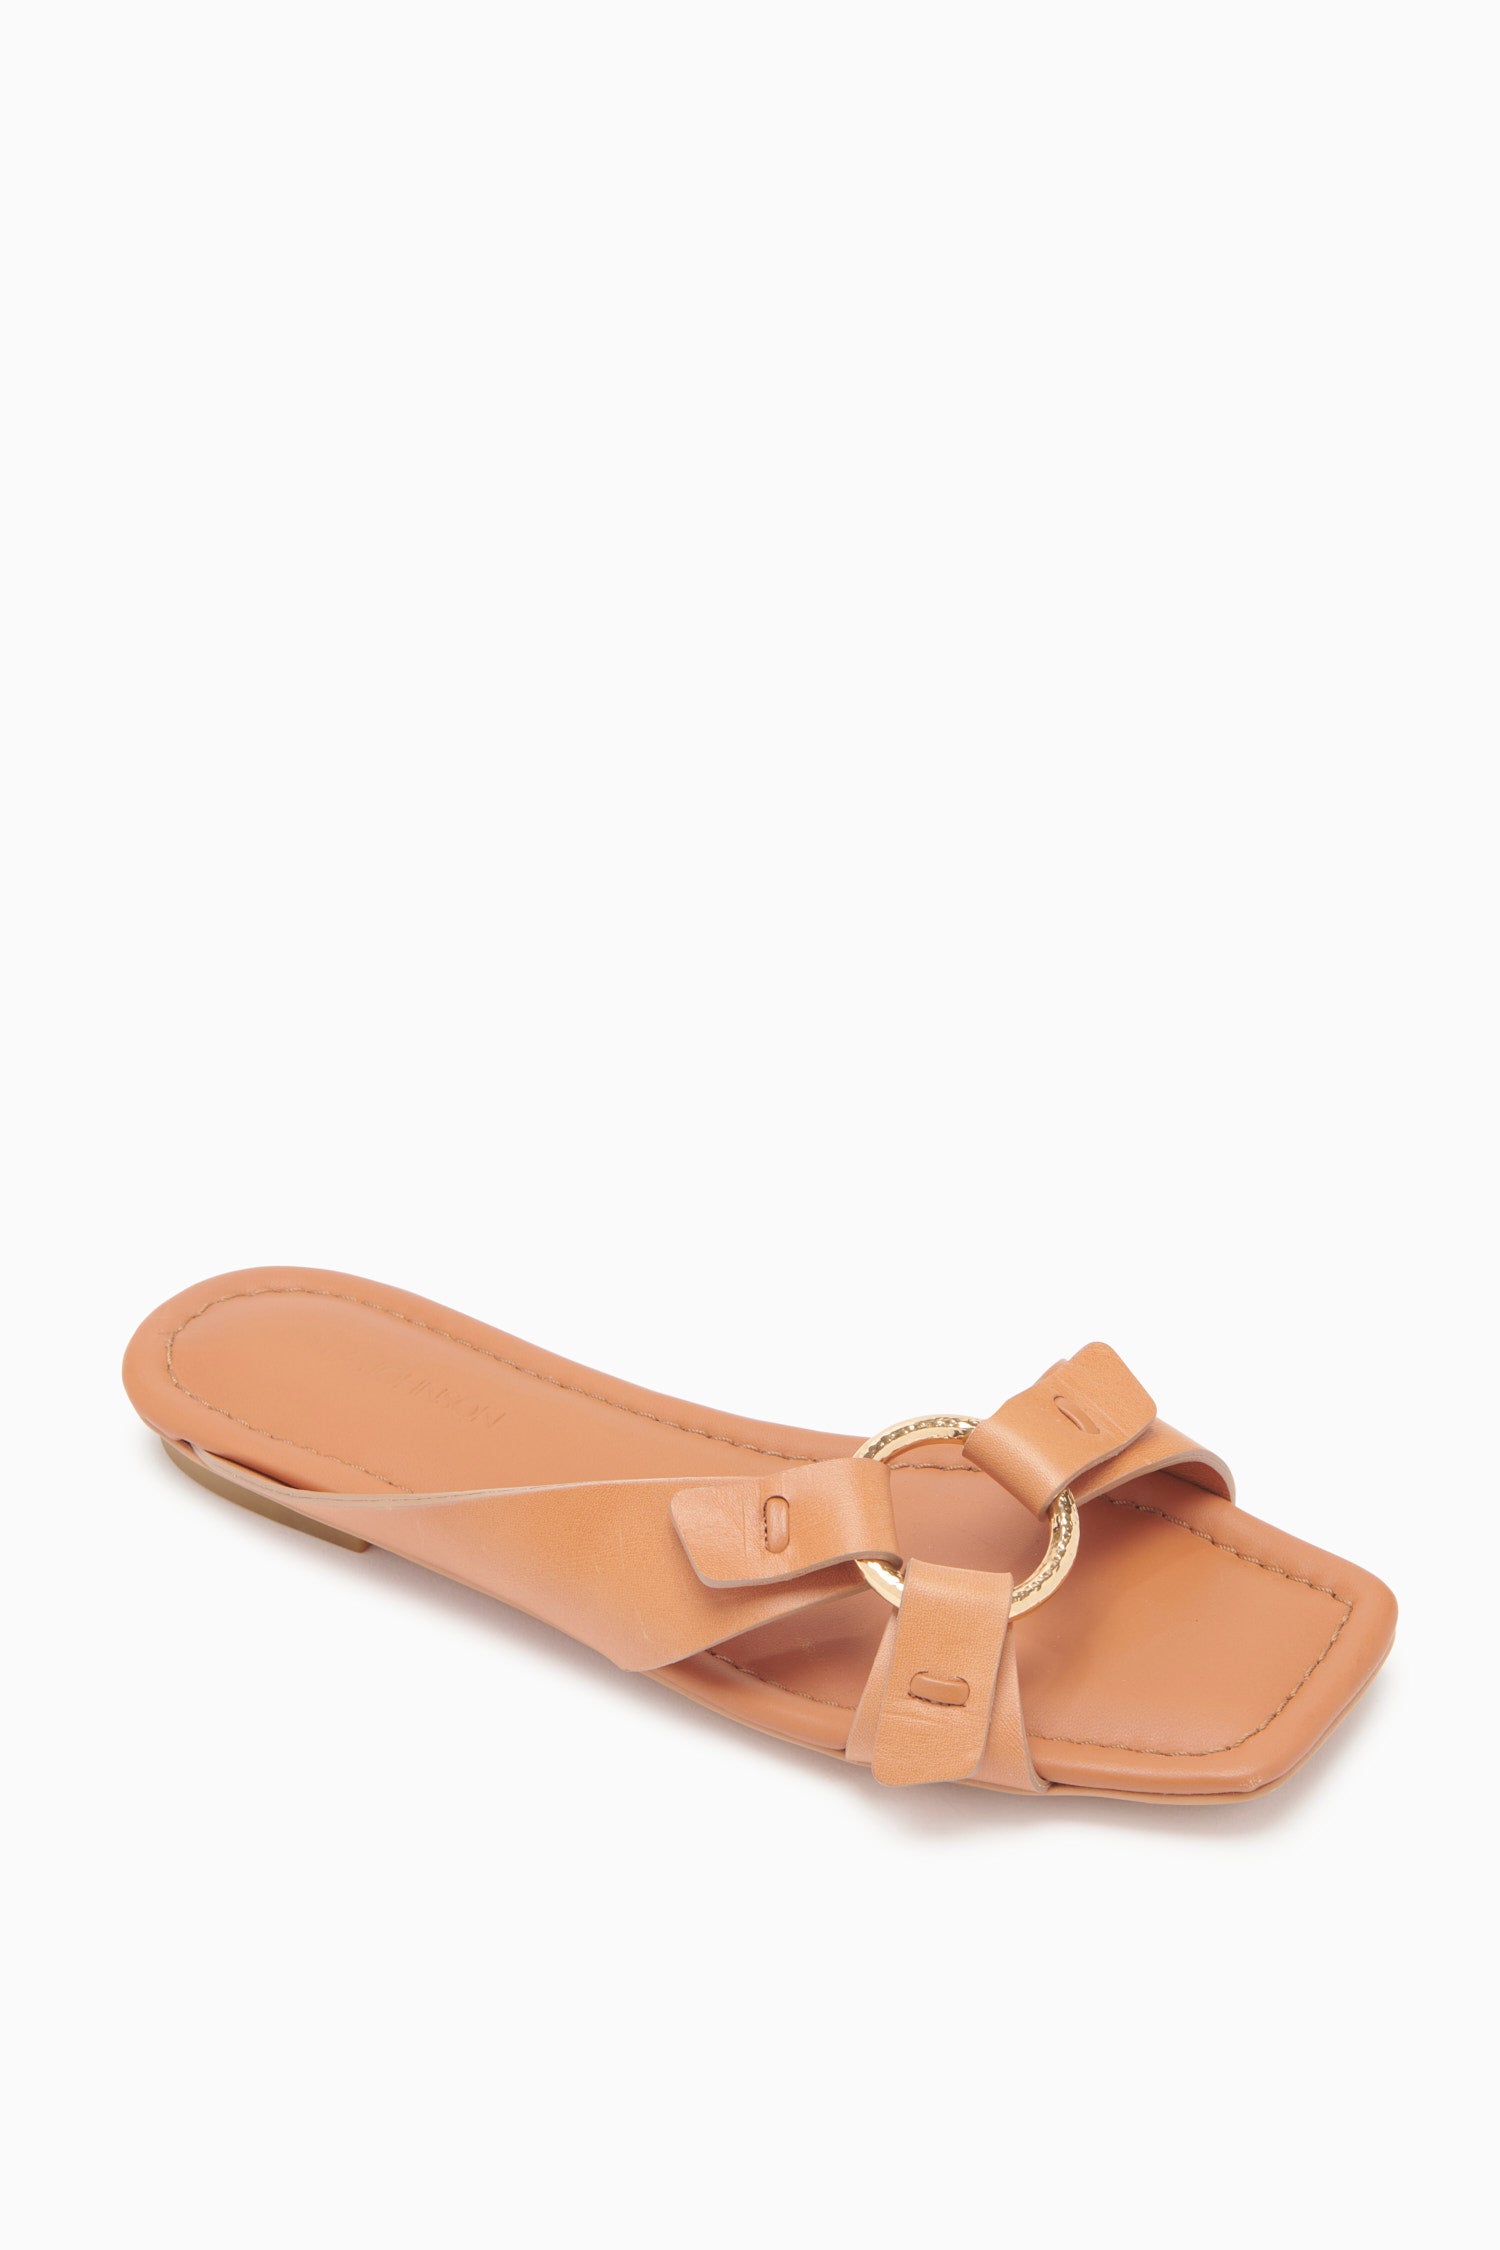 Anya Slide - Pecan Brown Brown Leather Slide Sandals - Ulla Johnson